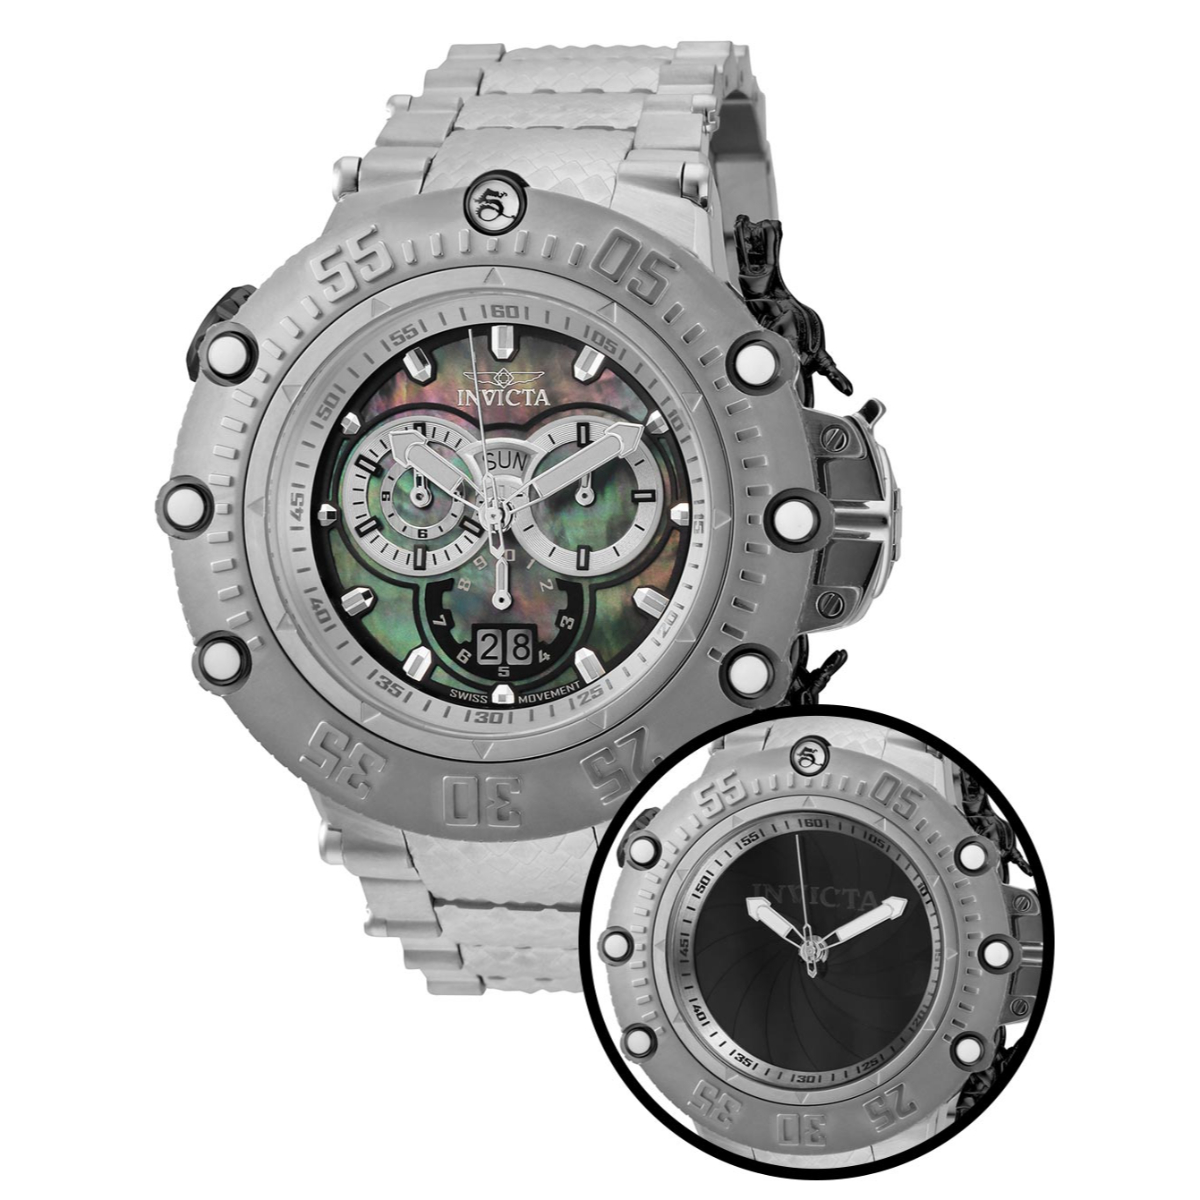 Invicta Watches logo